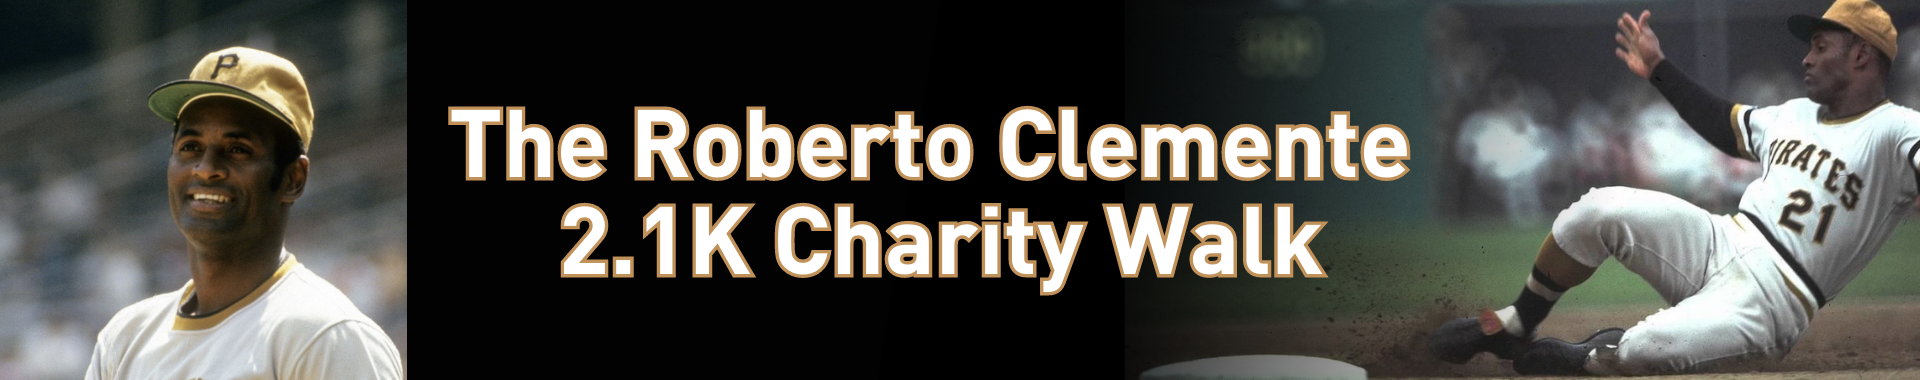 Roberto Clemente Foundation 21